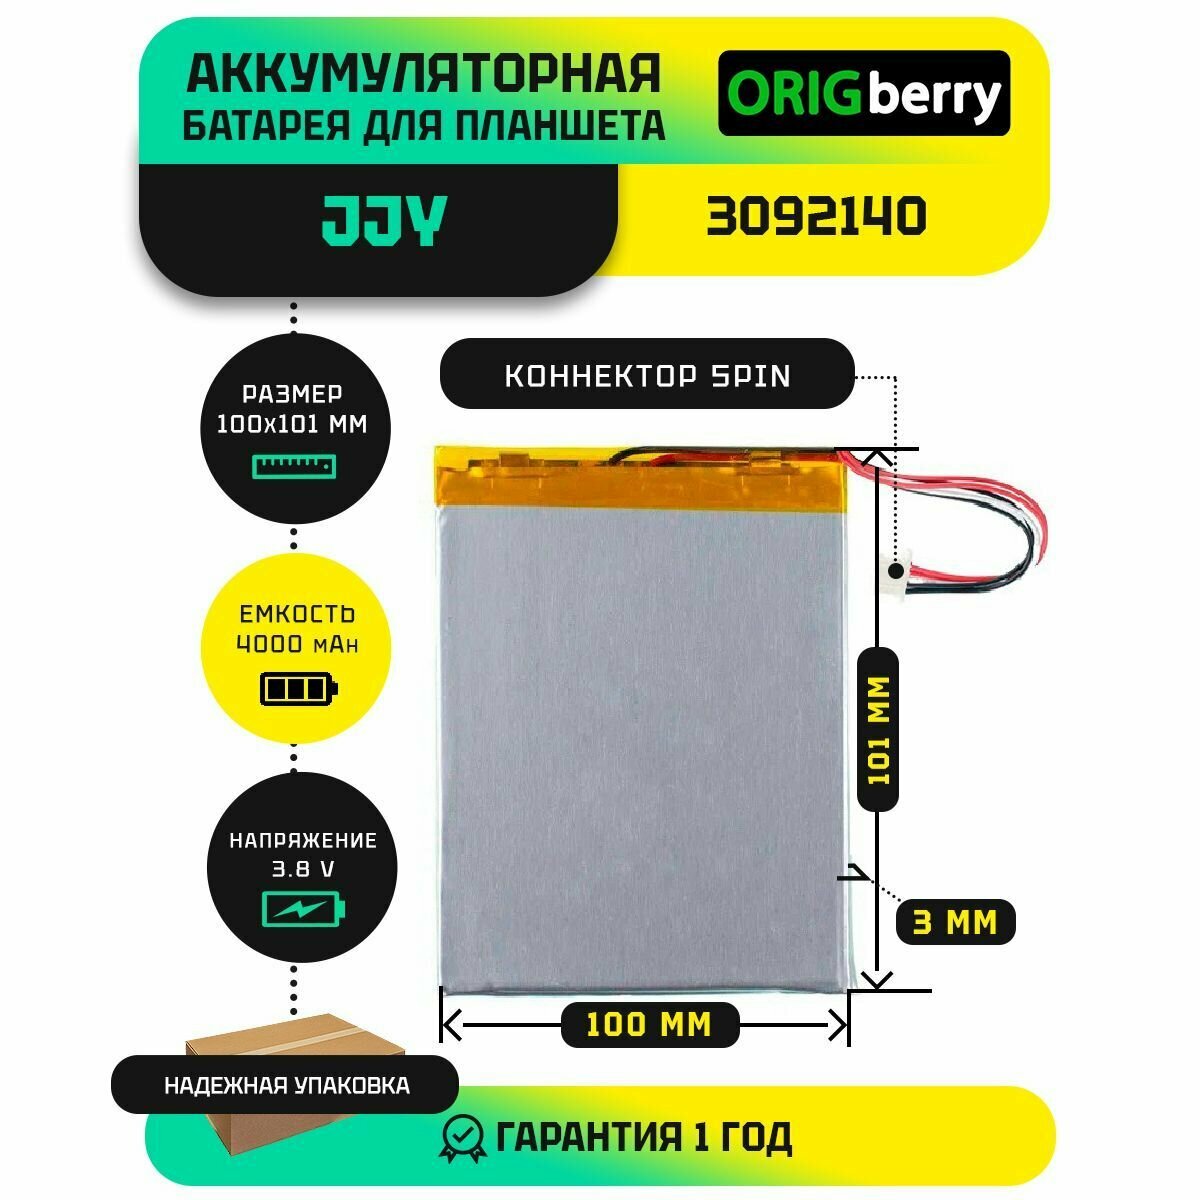 Аккумулятор для планшета JJY 3092140 3,8 V / 4000 mAh / 101мм x 100мм / коннектор 5 PIN